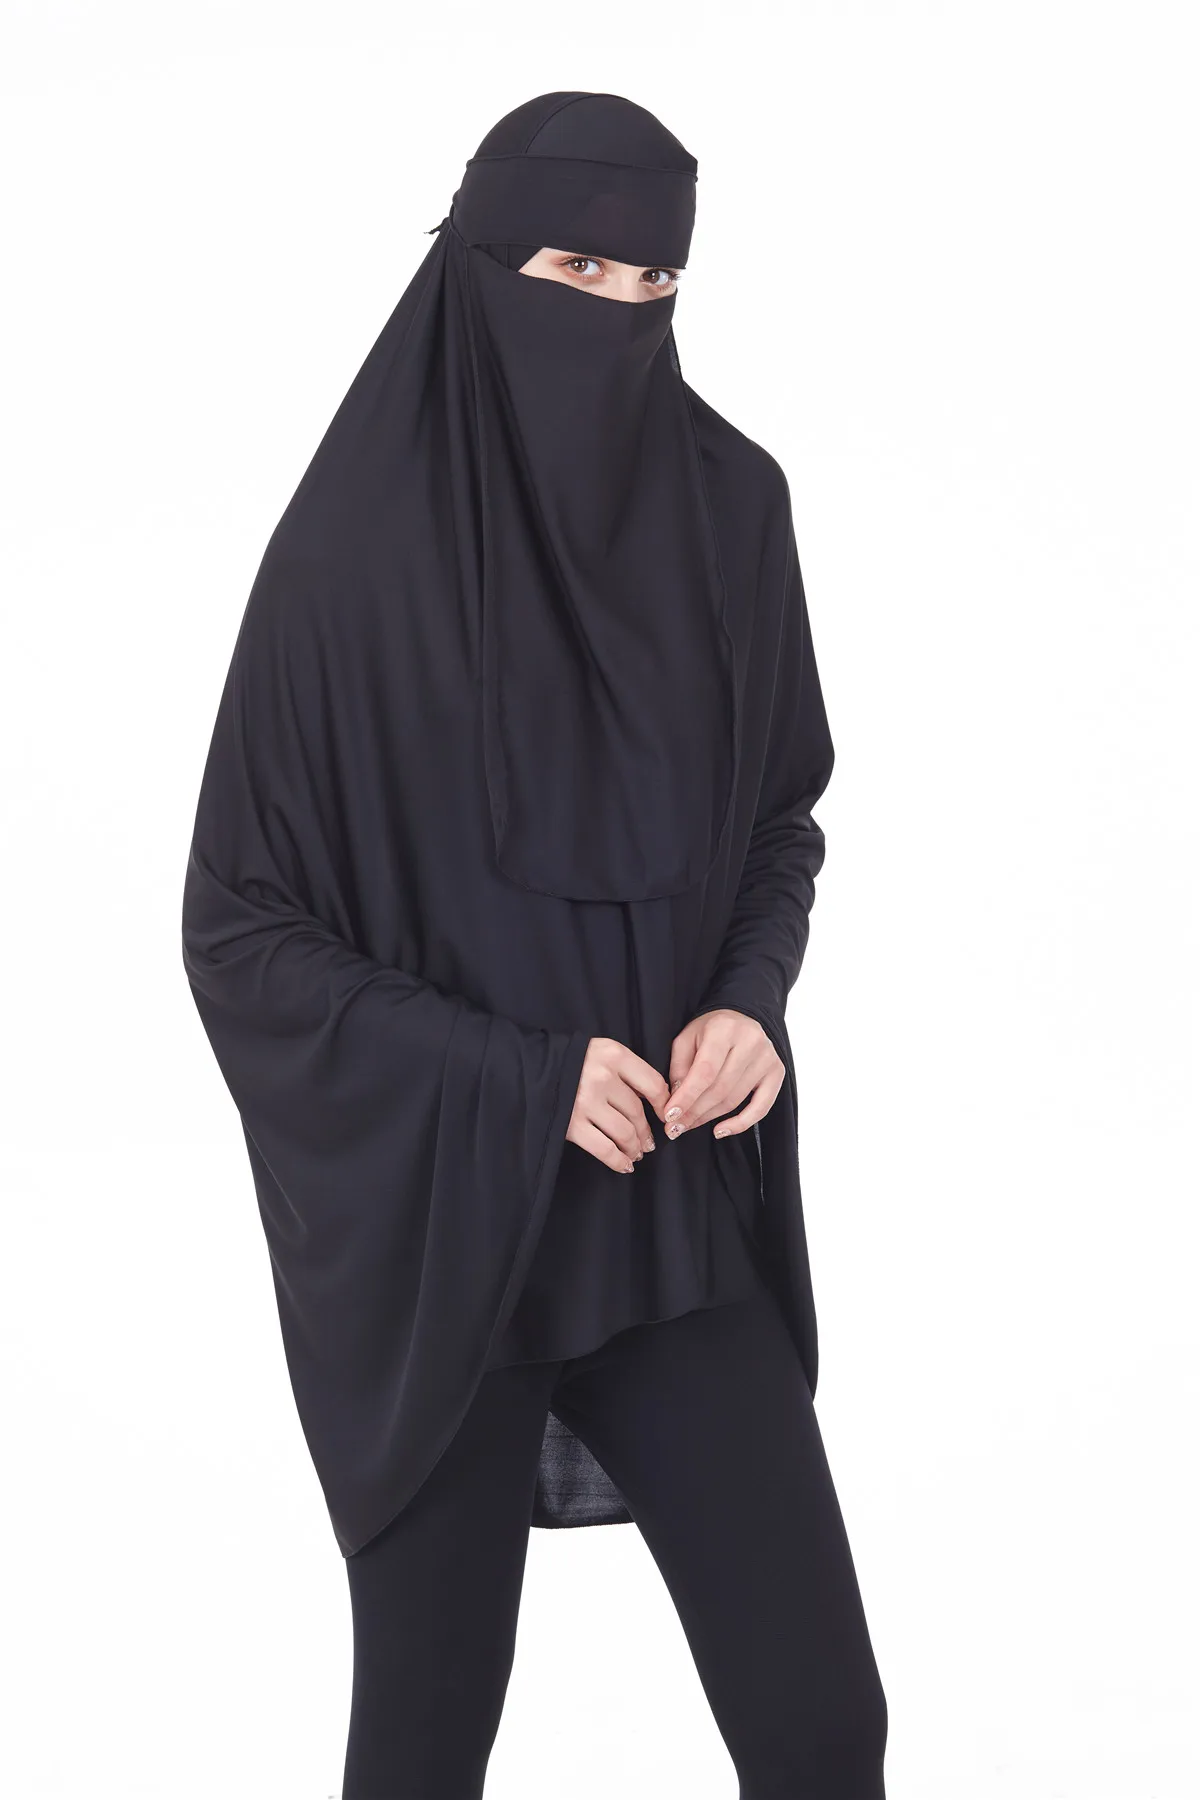 Muslim Ramadan Solid Color Women Hijab Mask Muslim Hooded Hijab Islamic ...